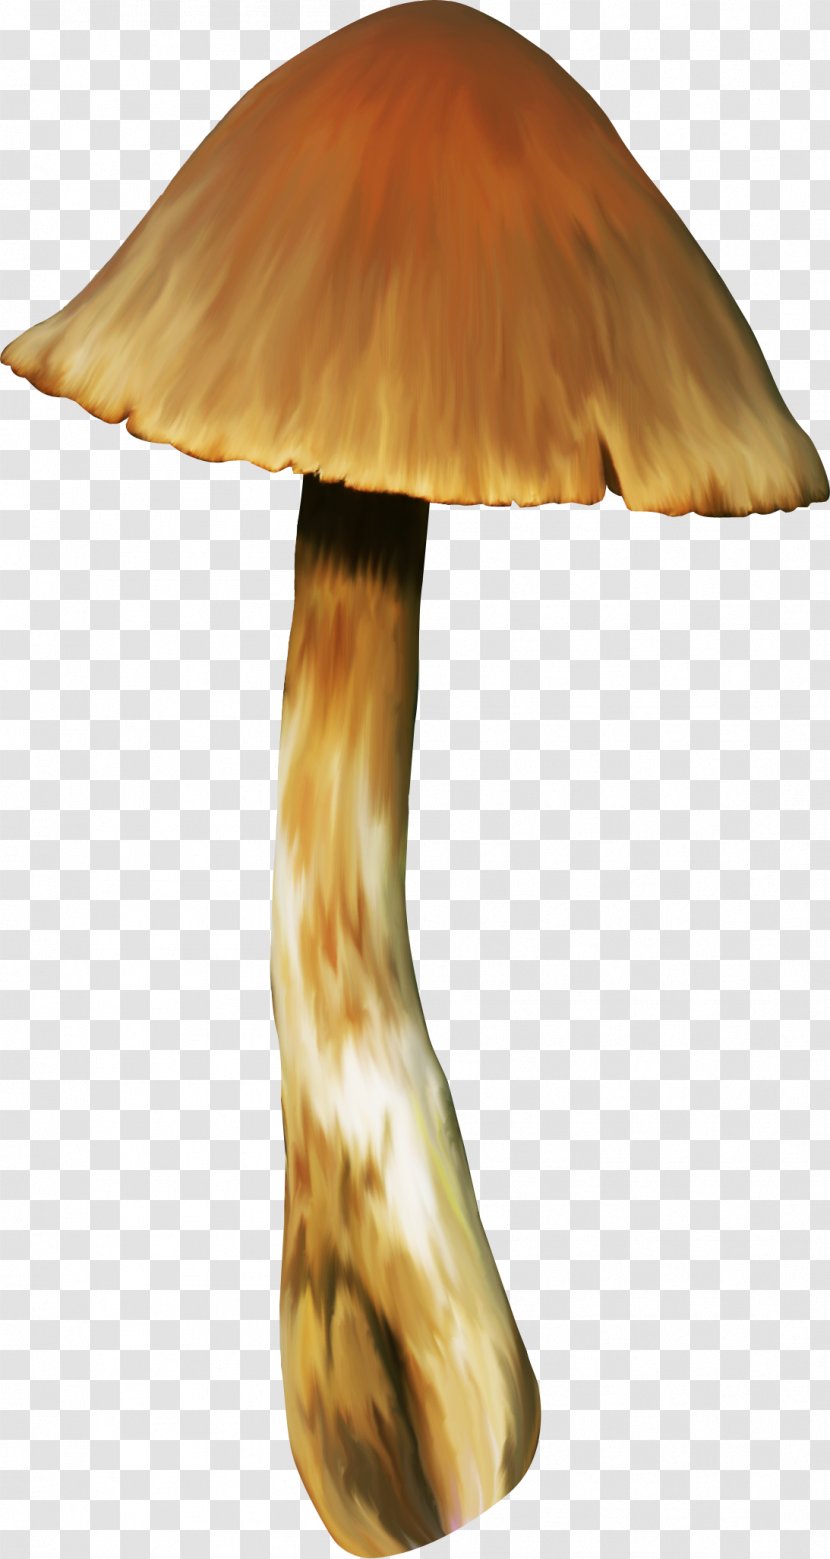 Wood Mushroom /m/083vt - Mushrooms Transparent PNG